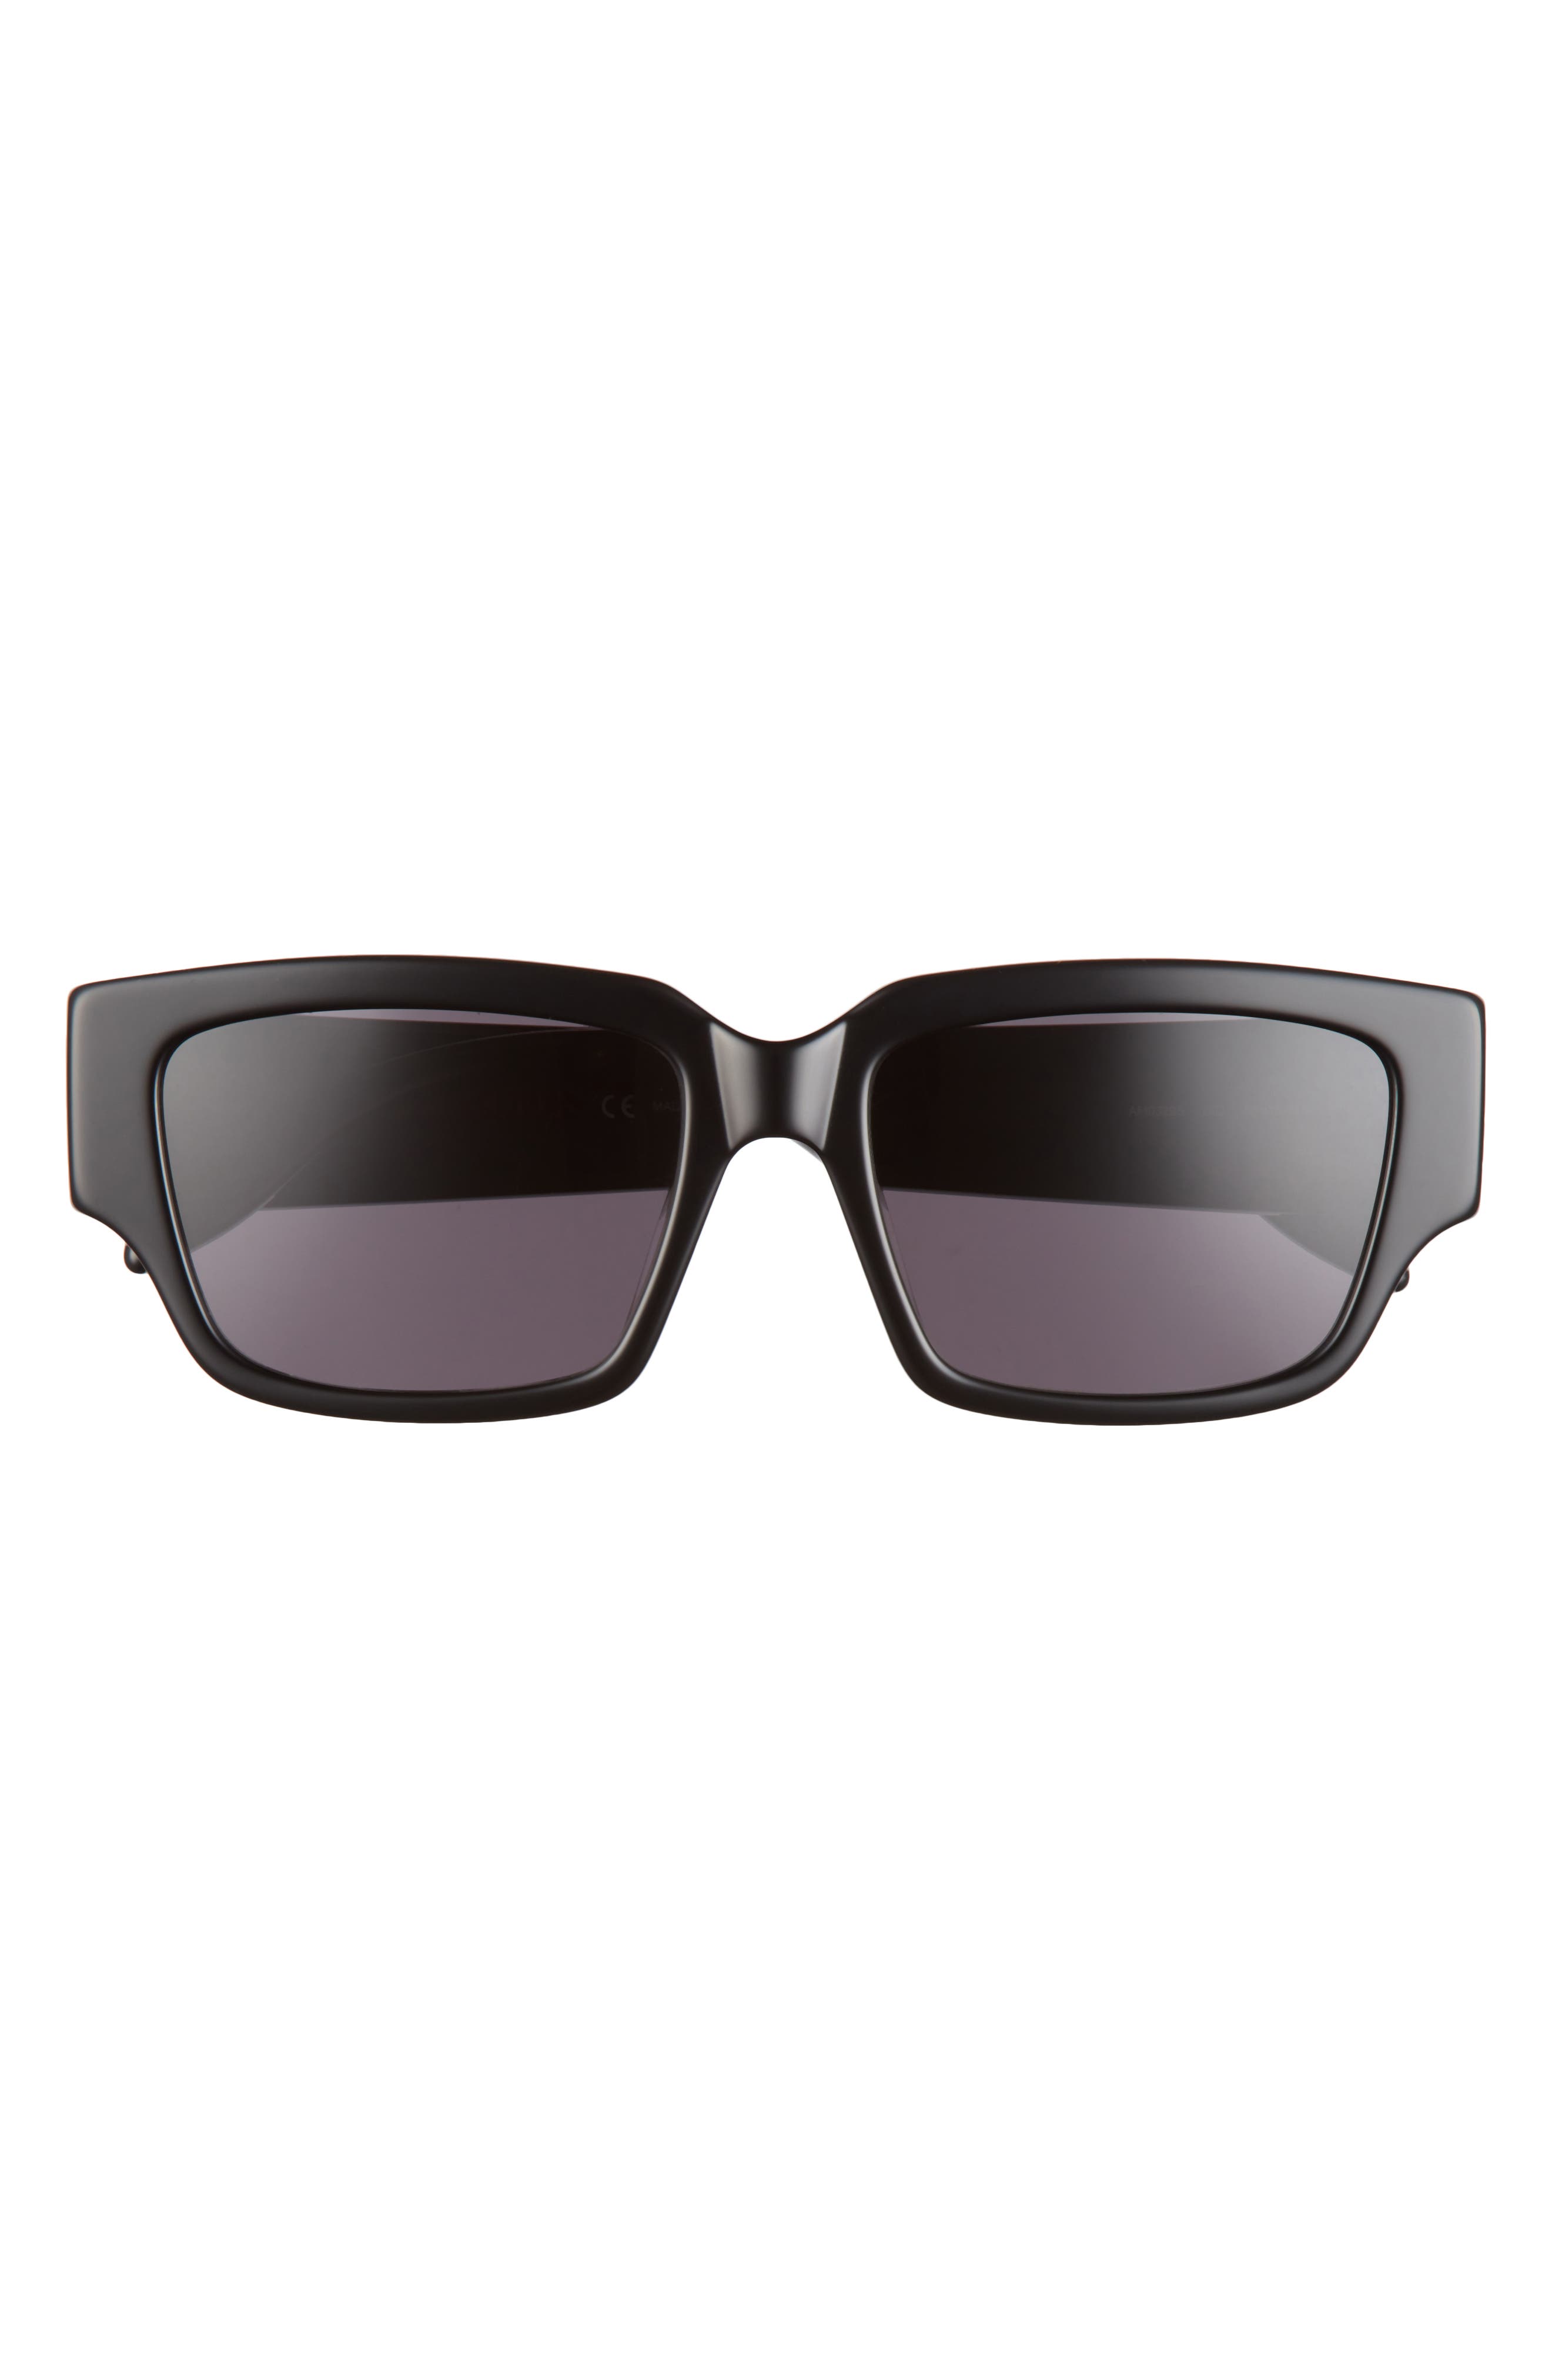 Alexander McQueen 56mm Rectangular Sunglasses in Black at Nordstrom